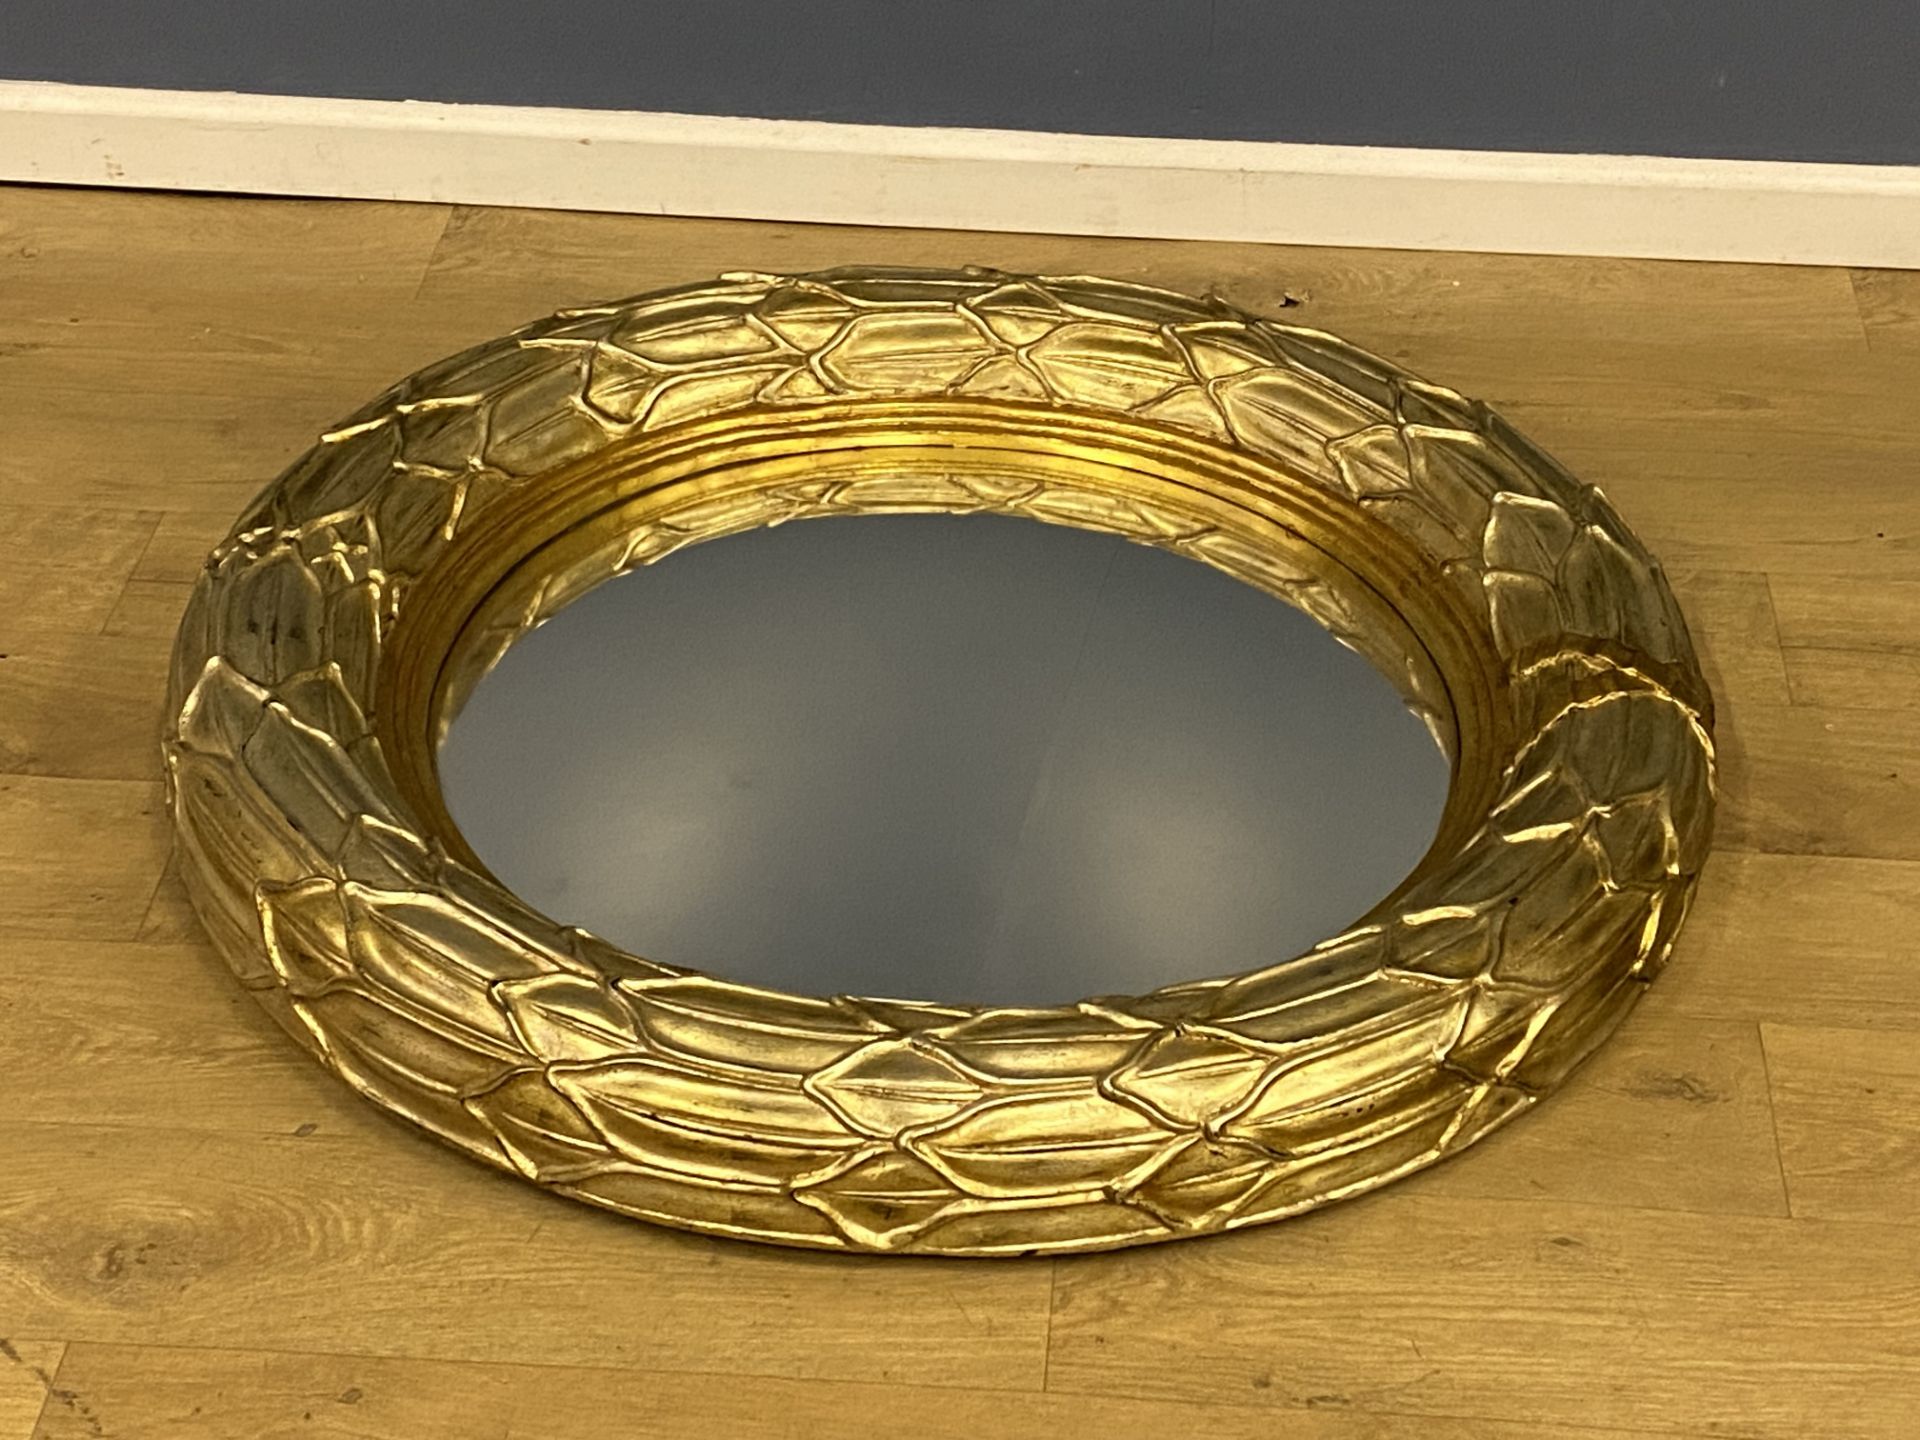 Contemporary gilt convex mirror - Image 3 of 4